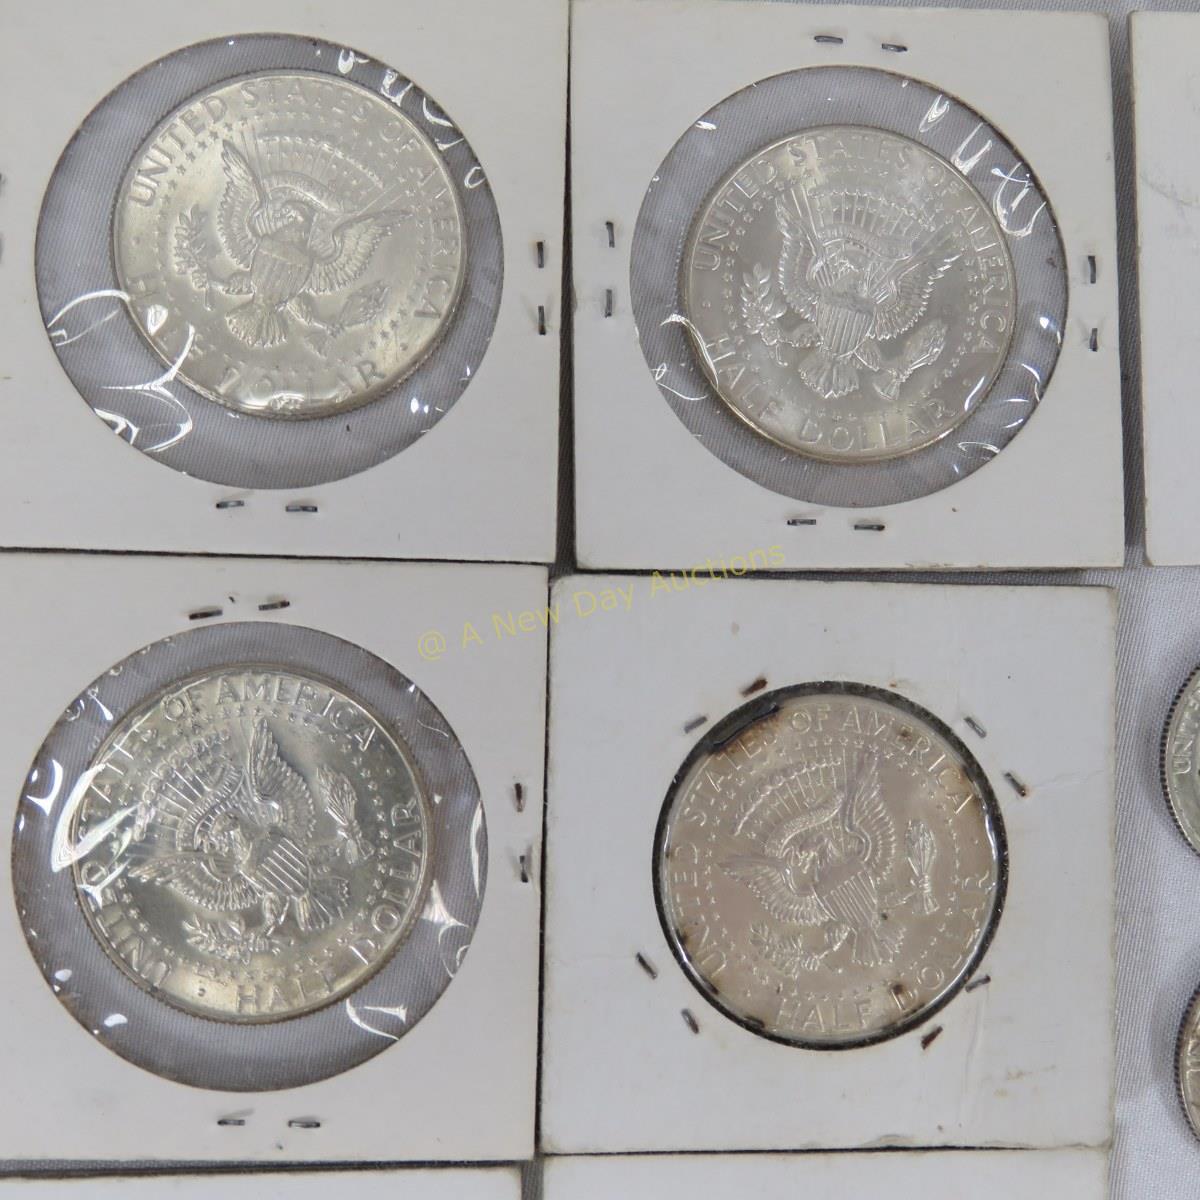 $10 Face mixed 90% silver US coins